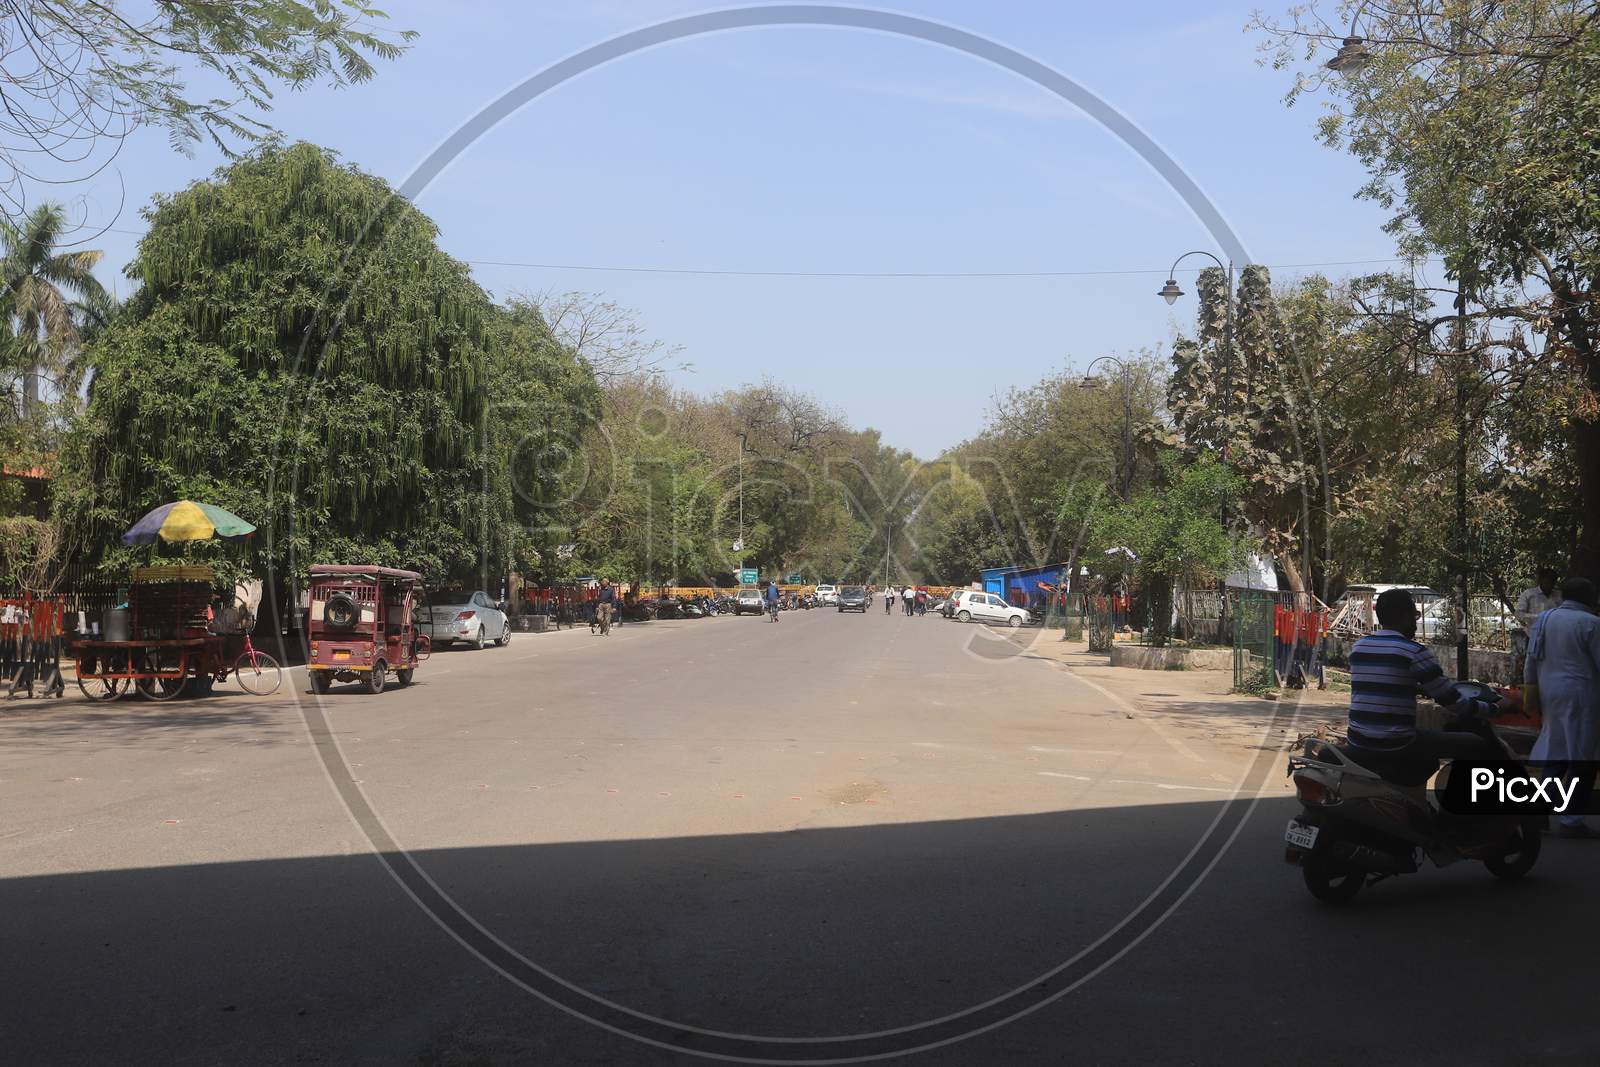 Deserted Roads  In prayagraj Due To Corona Virus Or COVID 19 Outbreak and Lock down